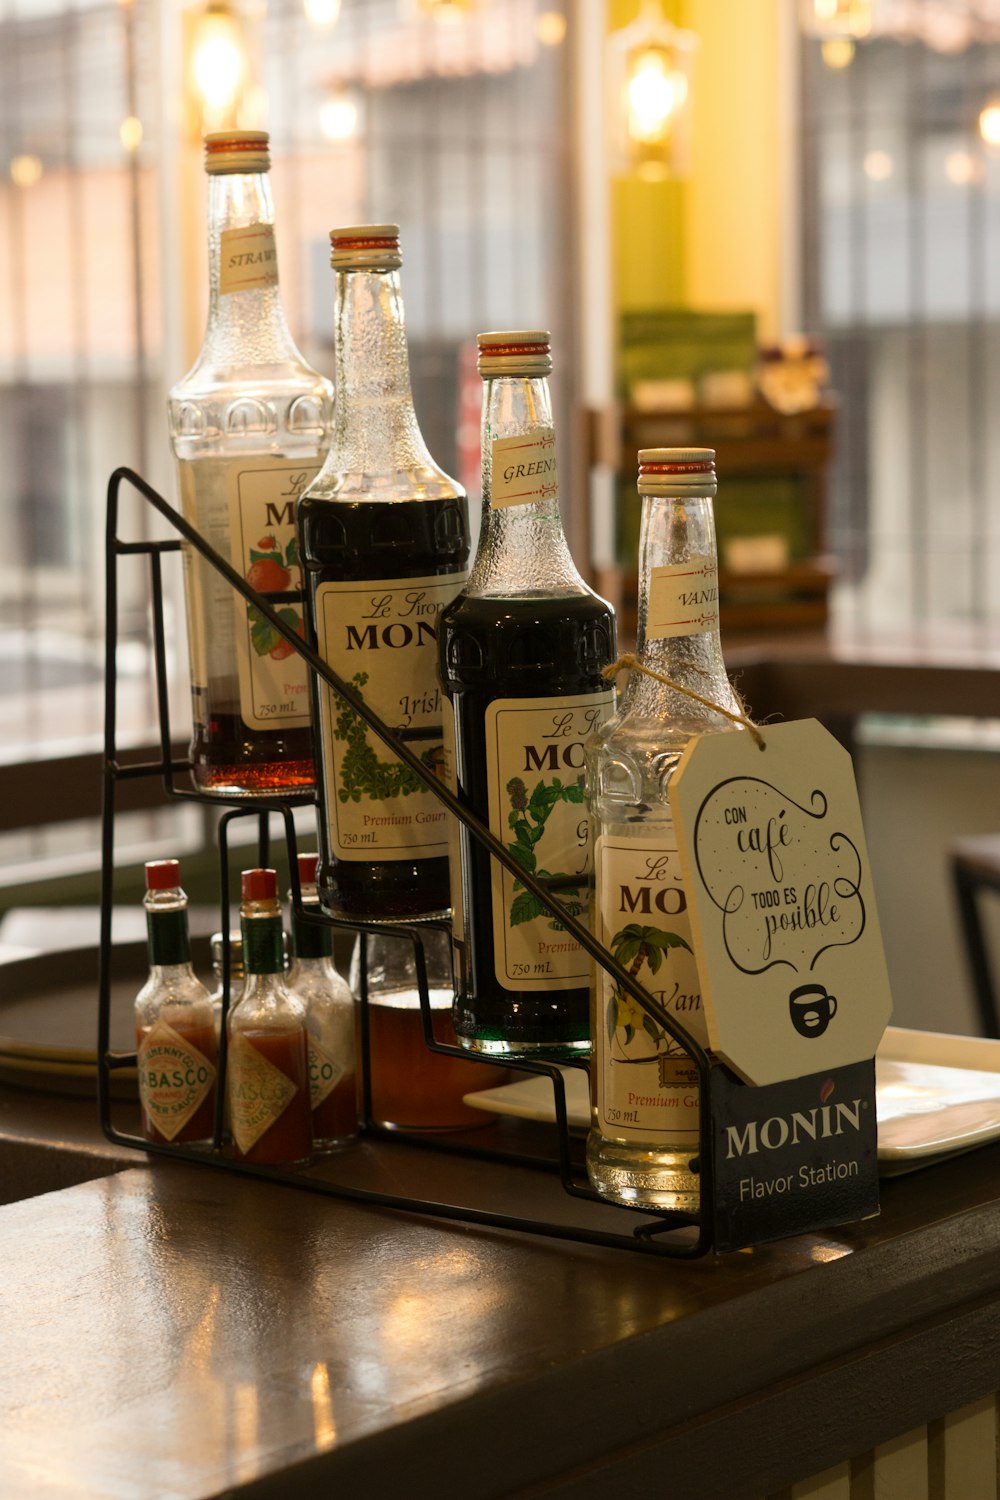 a display of liquor bottles on a bar